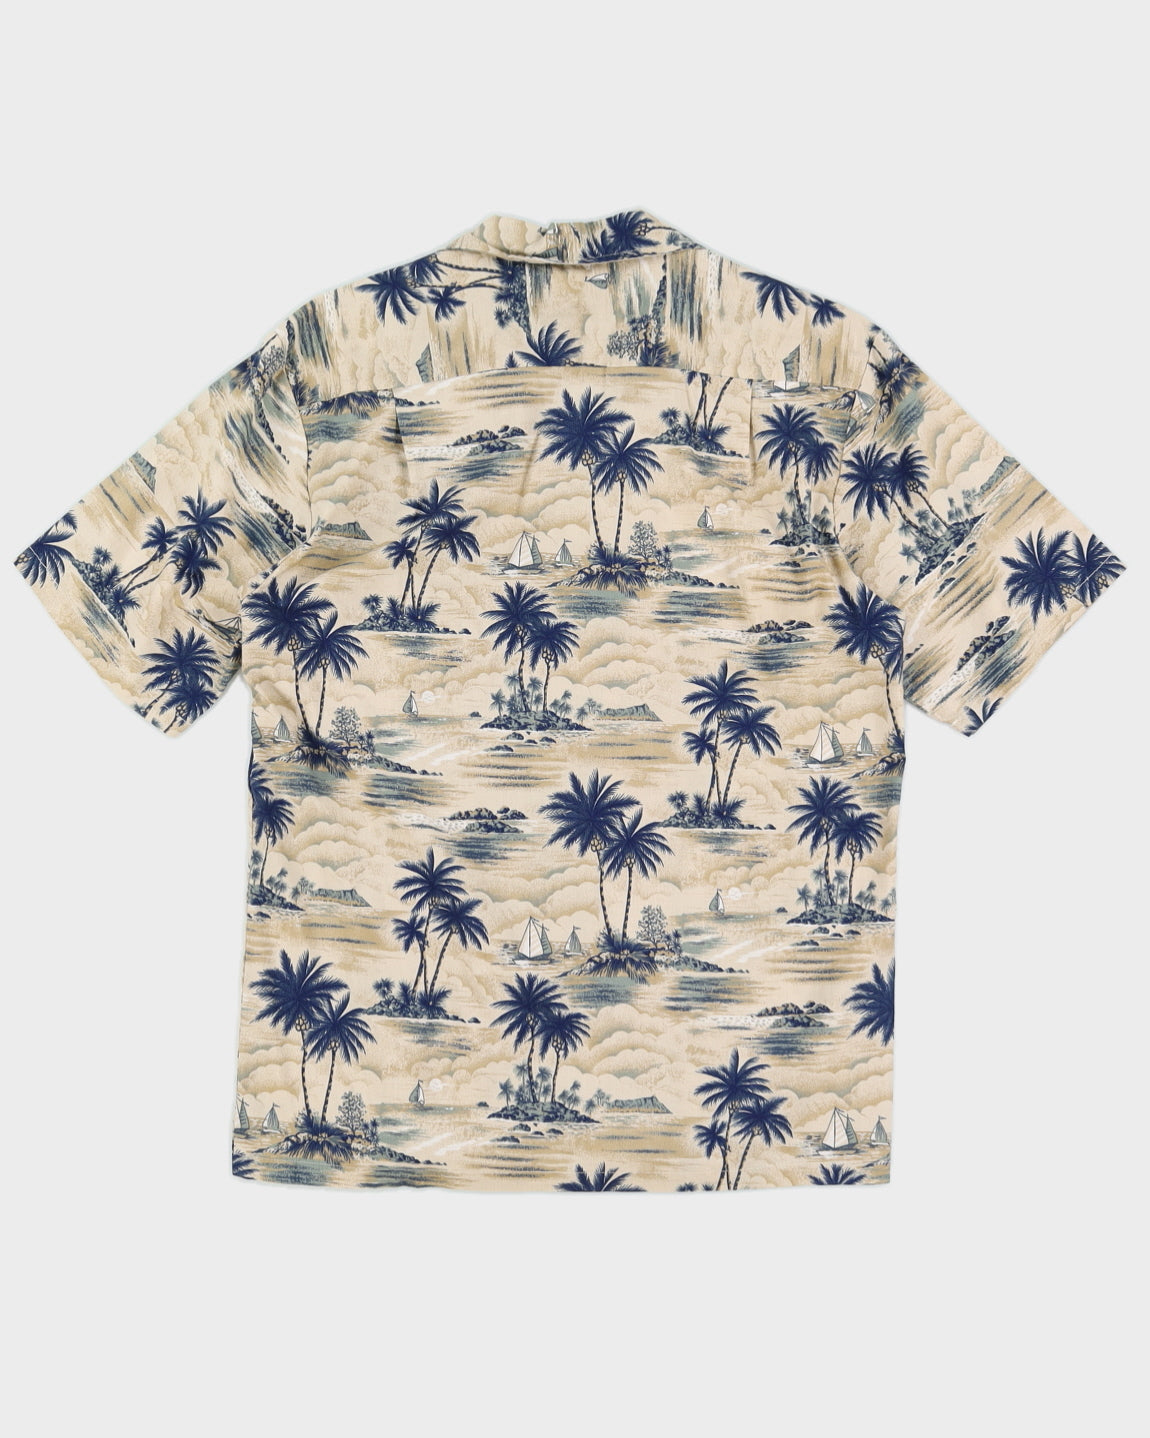 Beige Patterned Hawaiian Shirt - M